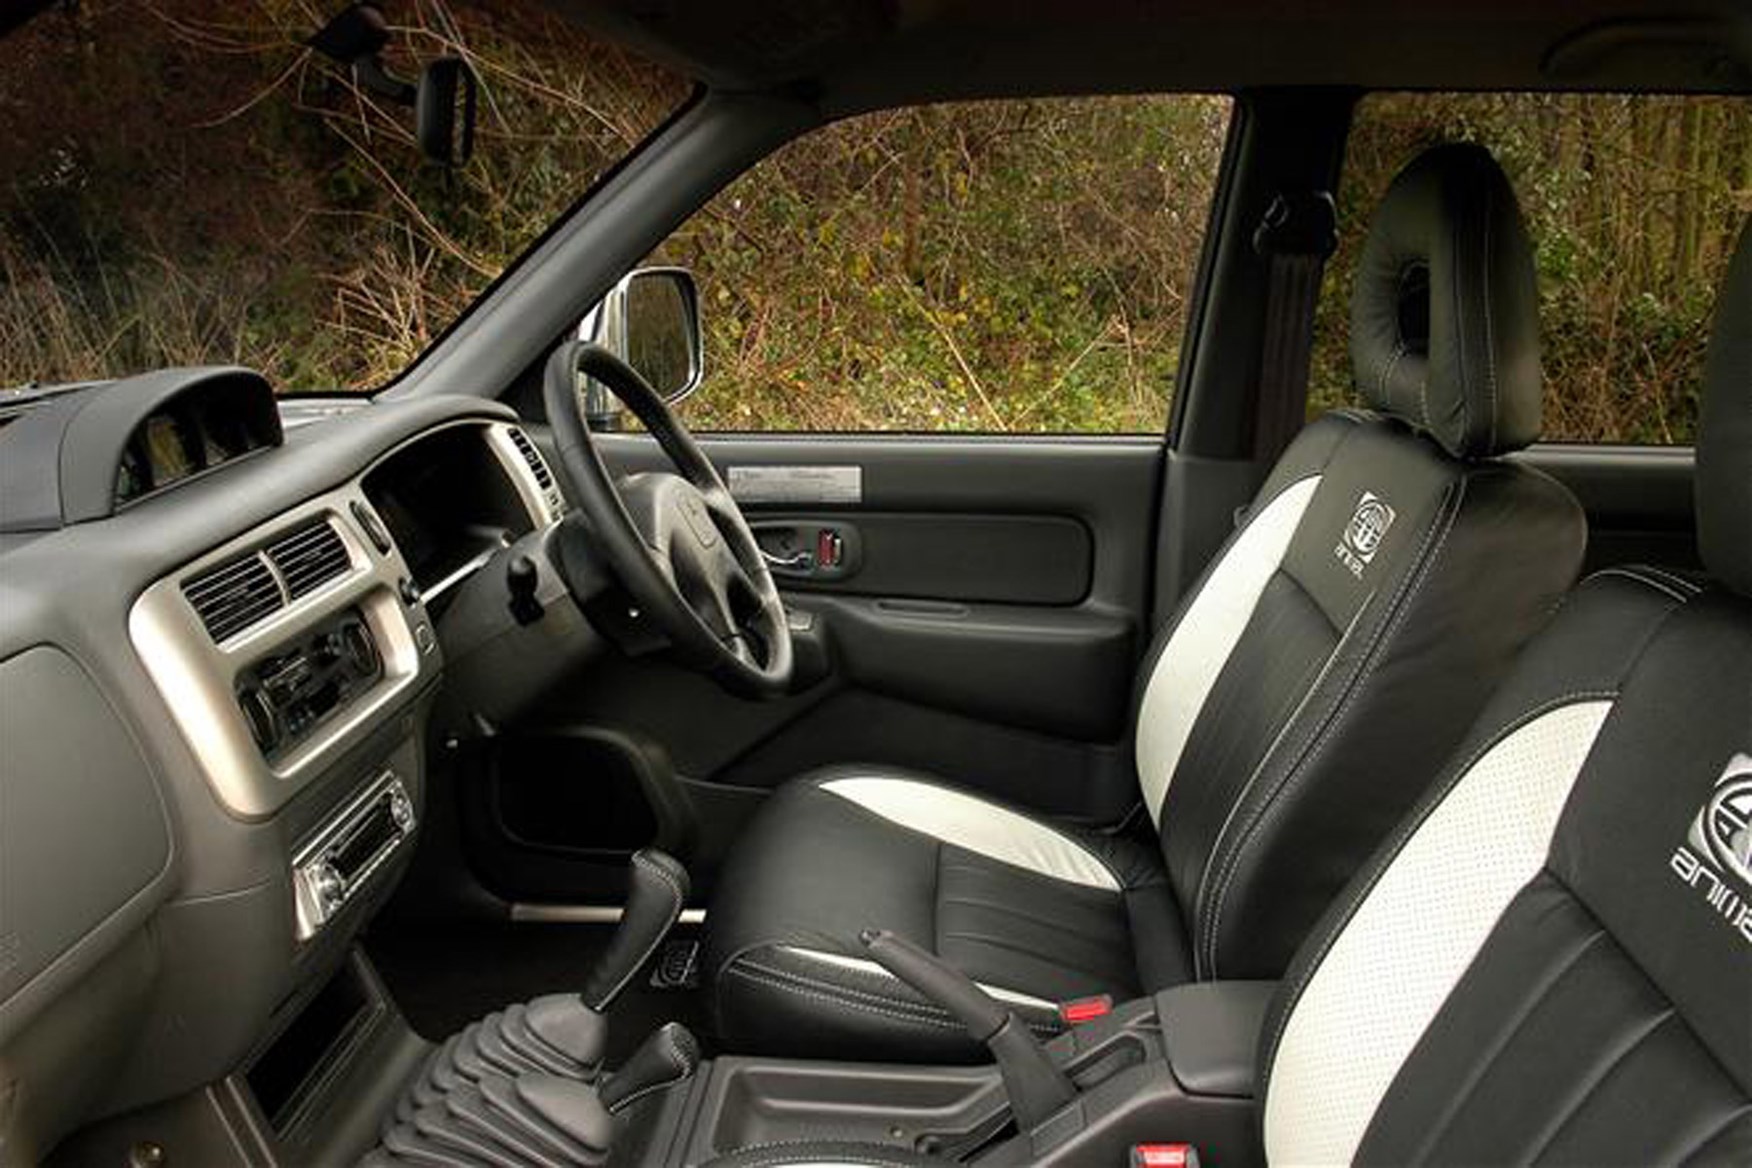 Mitsubishi L200 review on Parkers Vans - interior